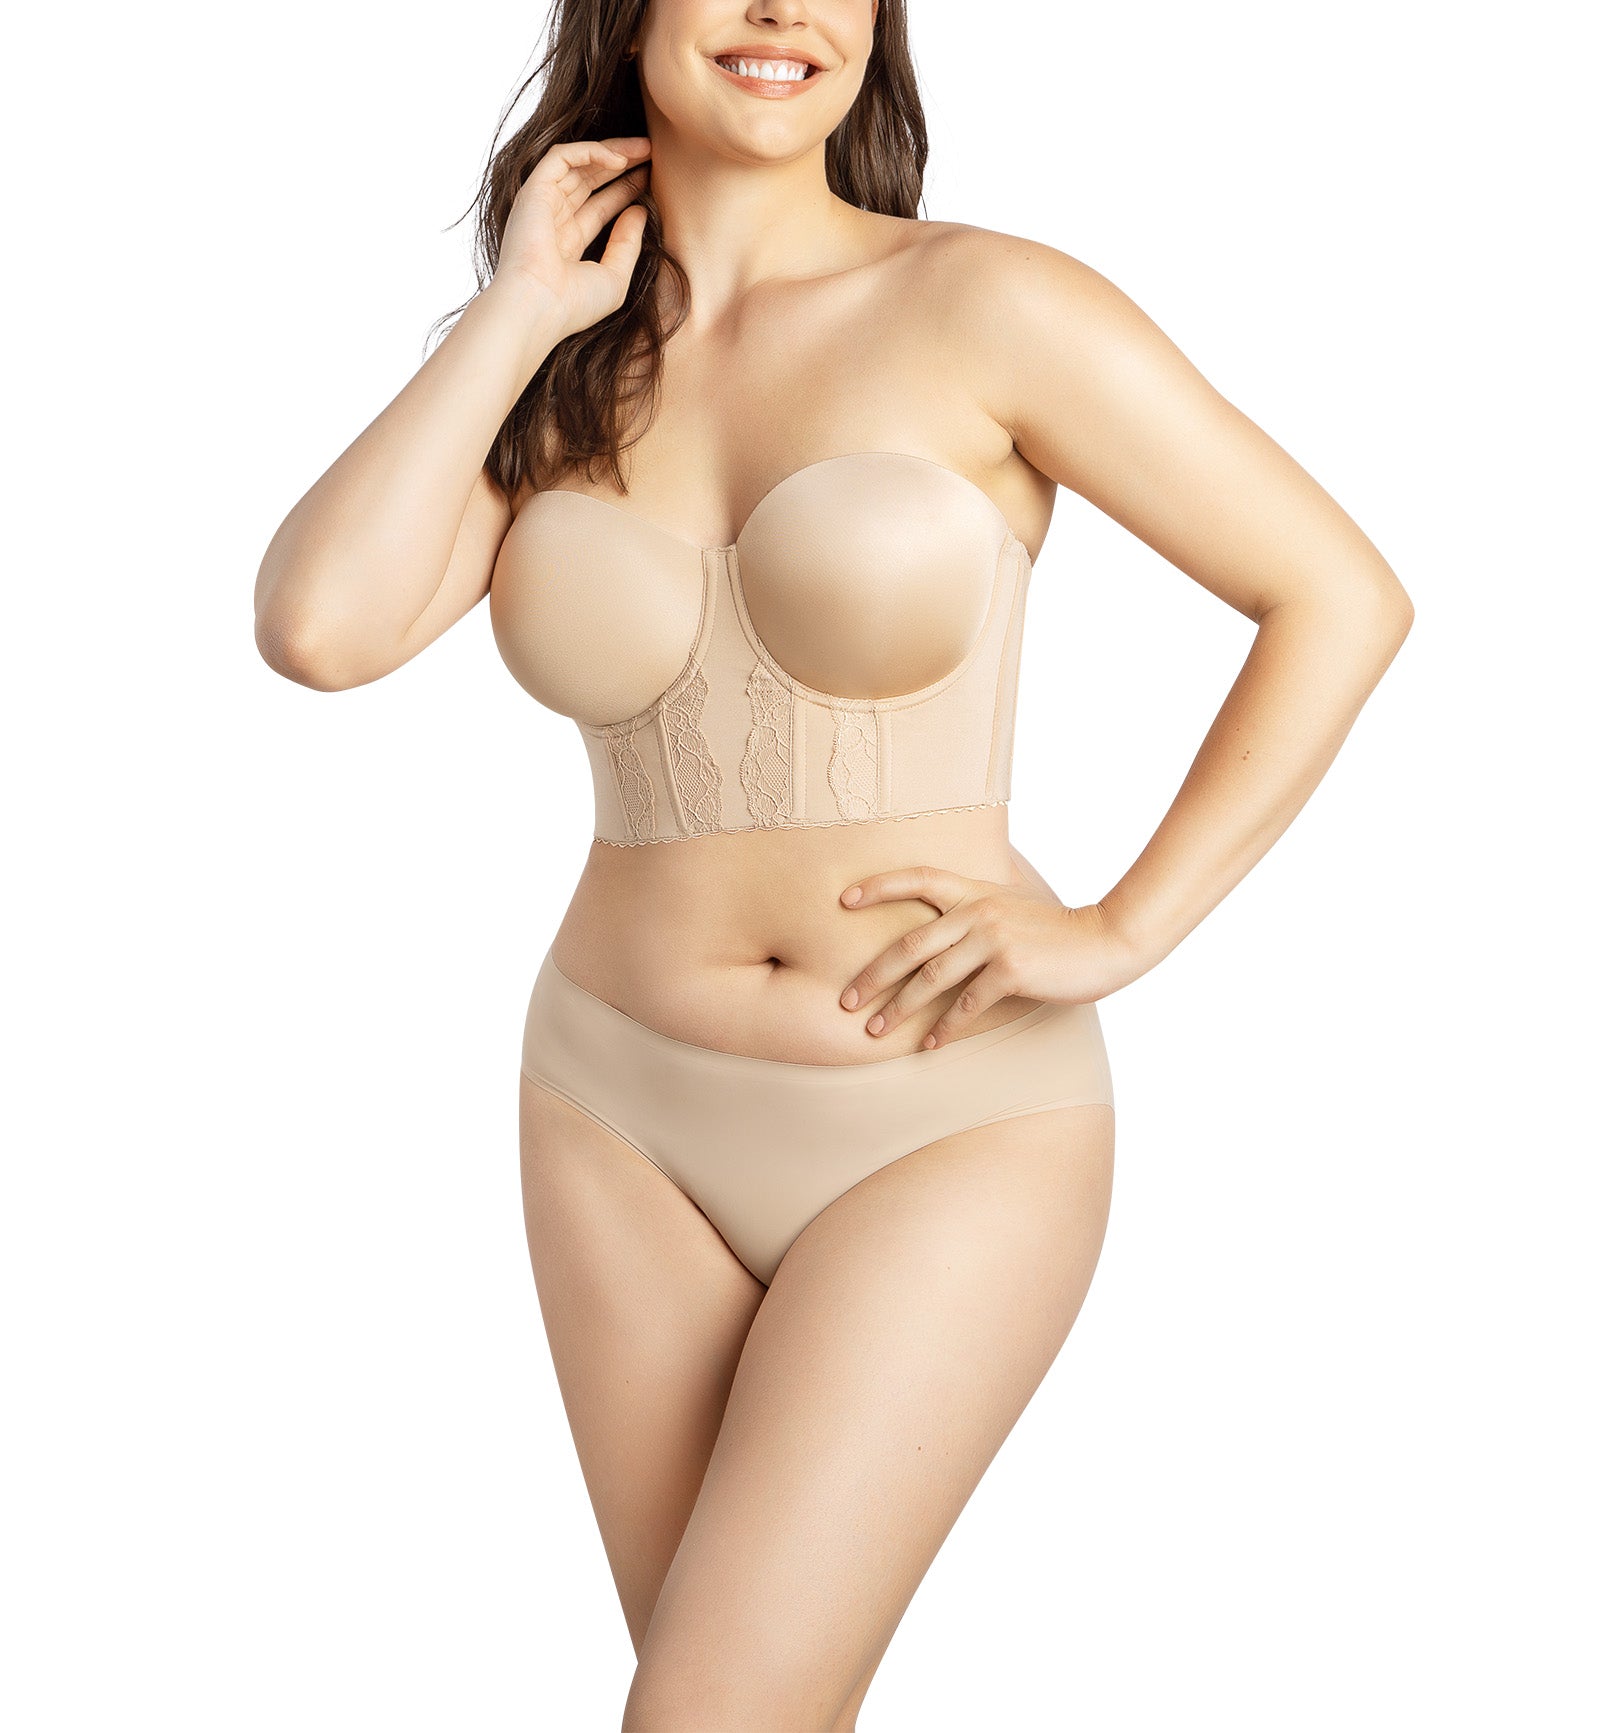 36G Bra Size in Nude/Nude by Parfait